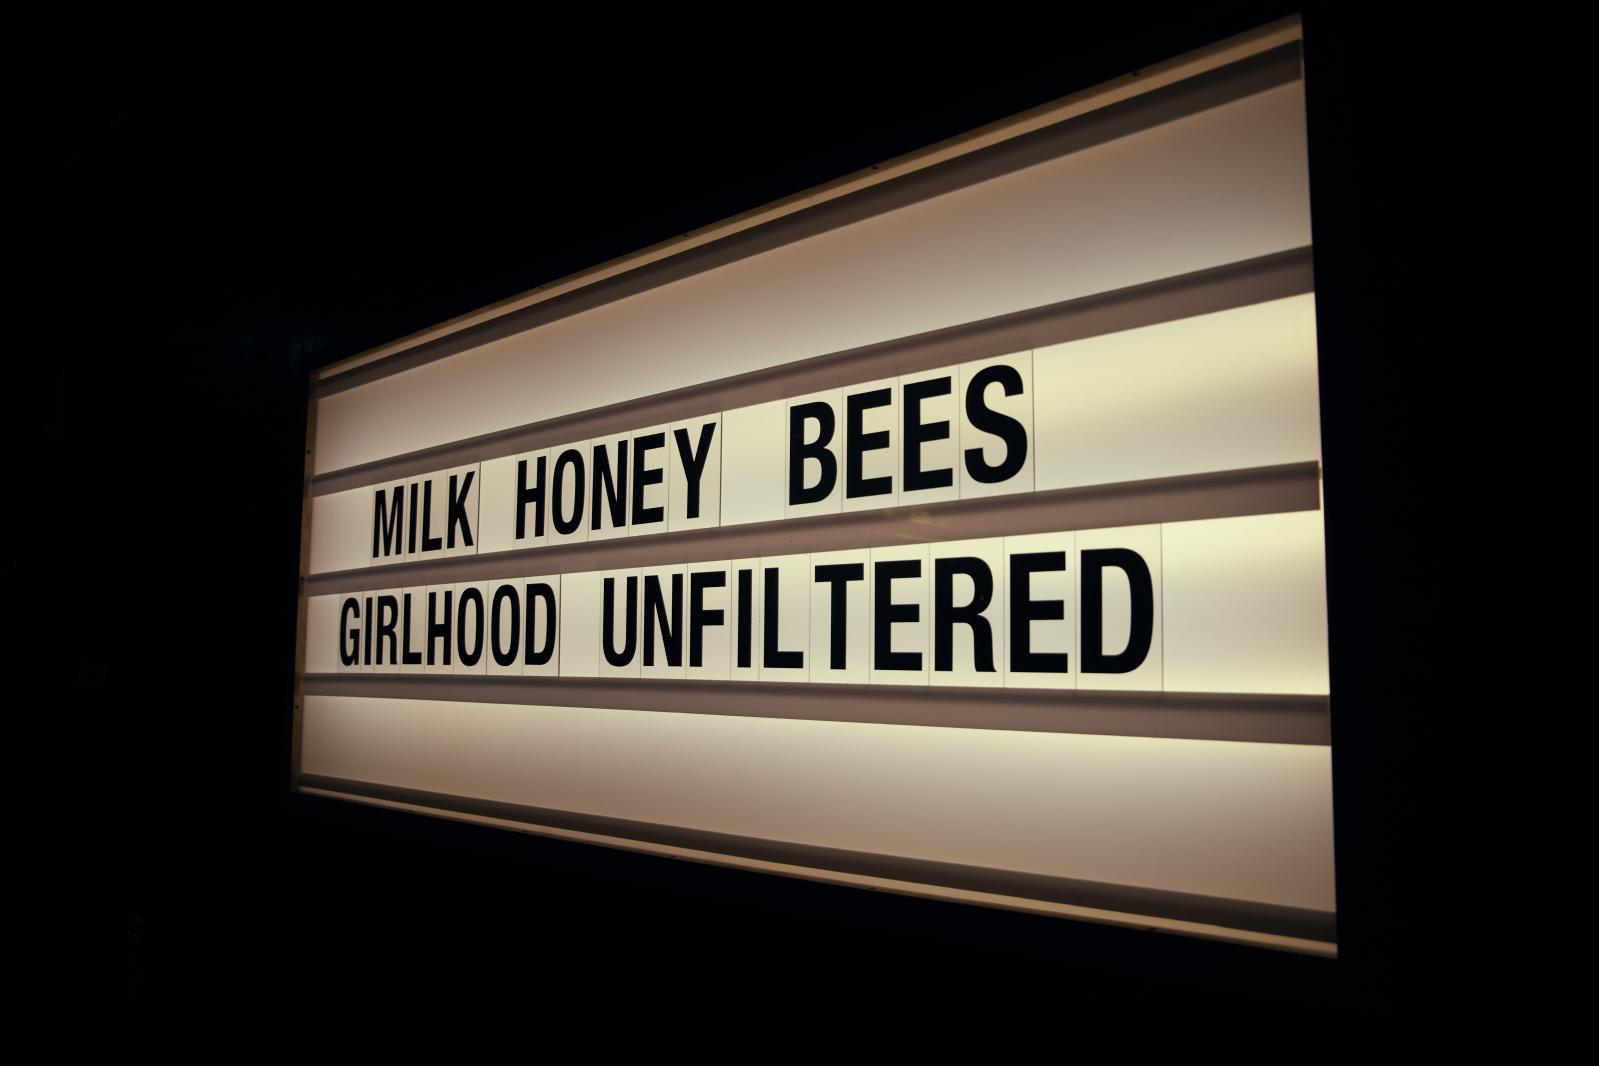 GIRLHOOD UNFILTERED - Milk Honey Bees